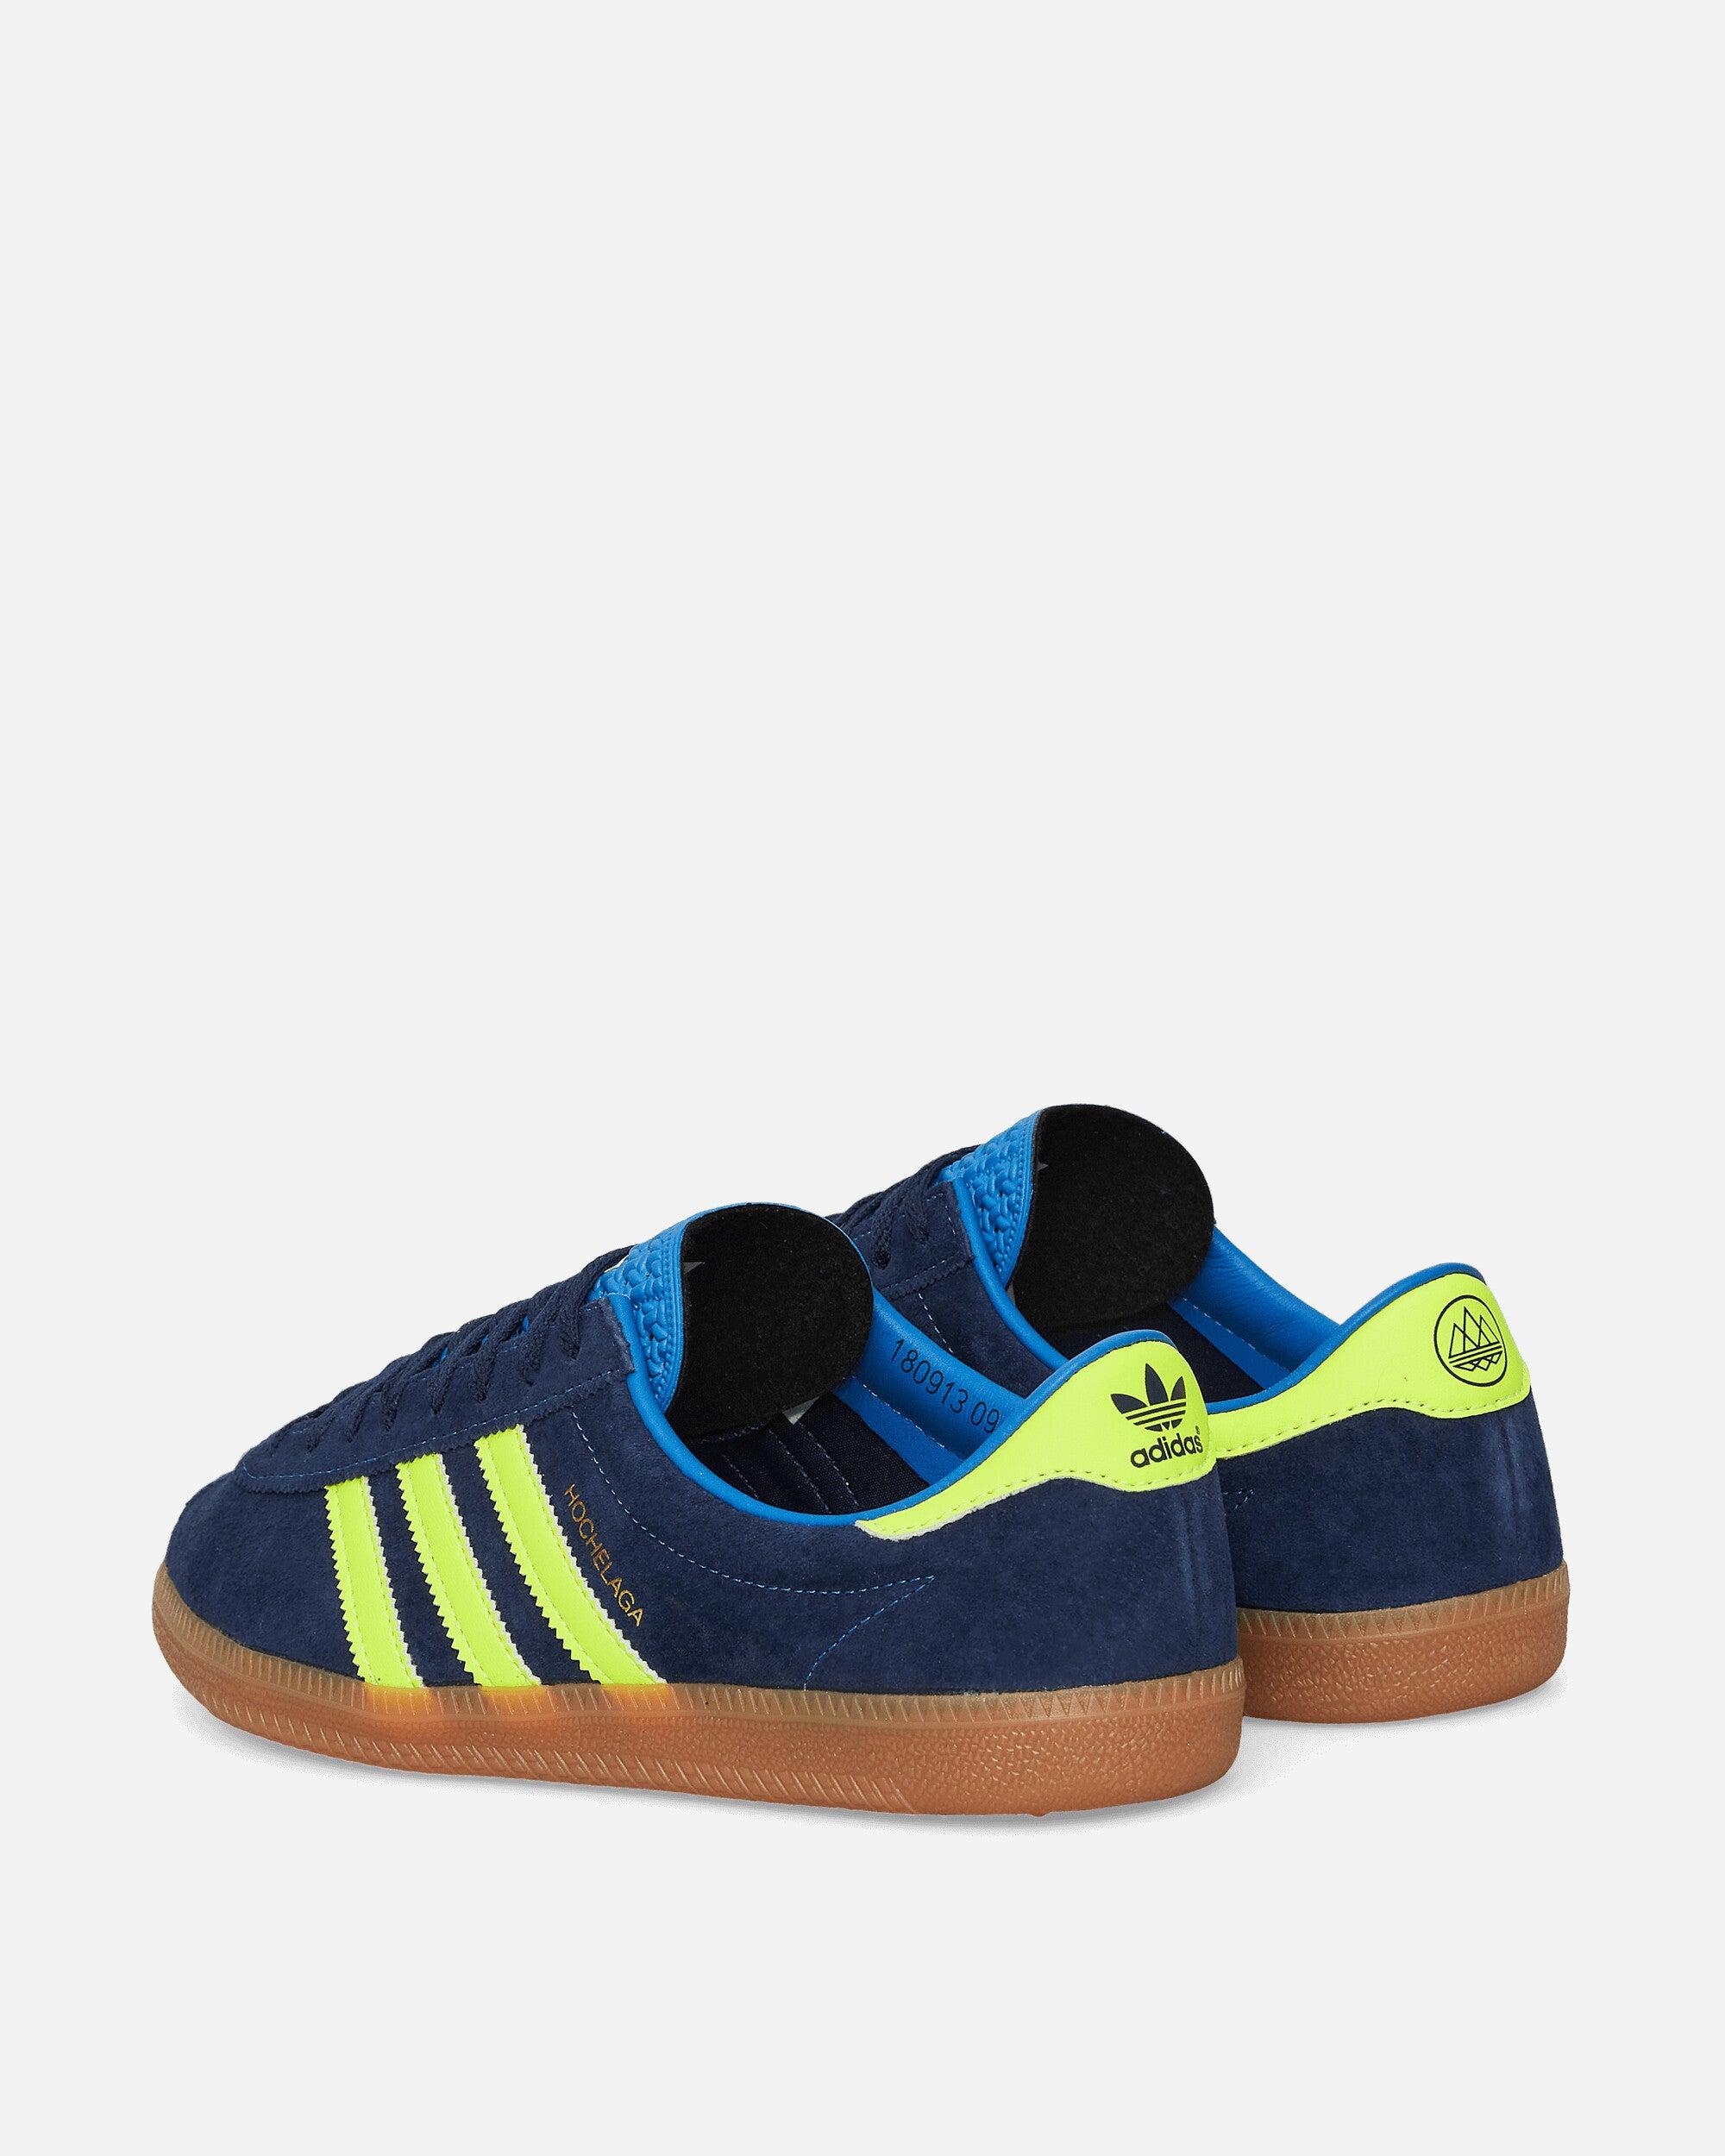 adidas Spezial Hochelaga Sneakers Blue for Men | Lyst